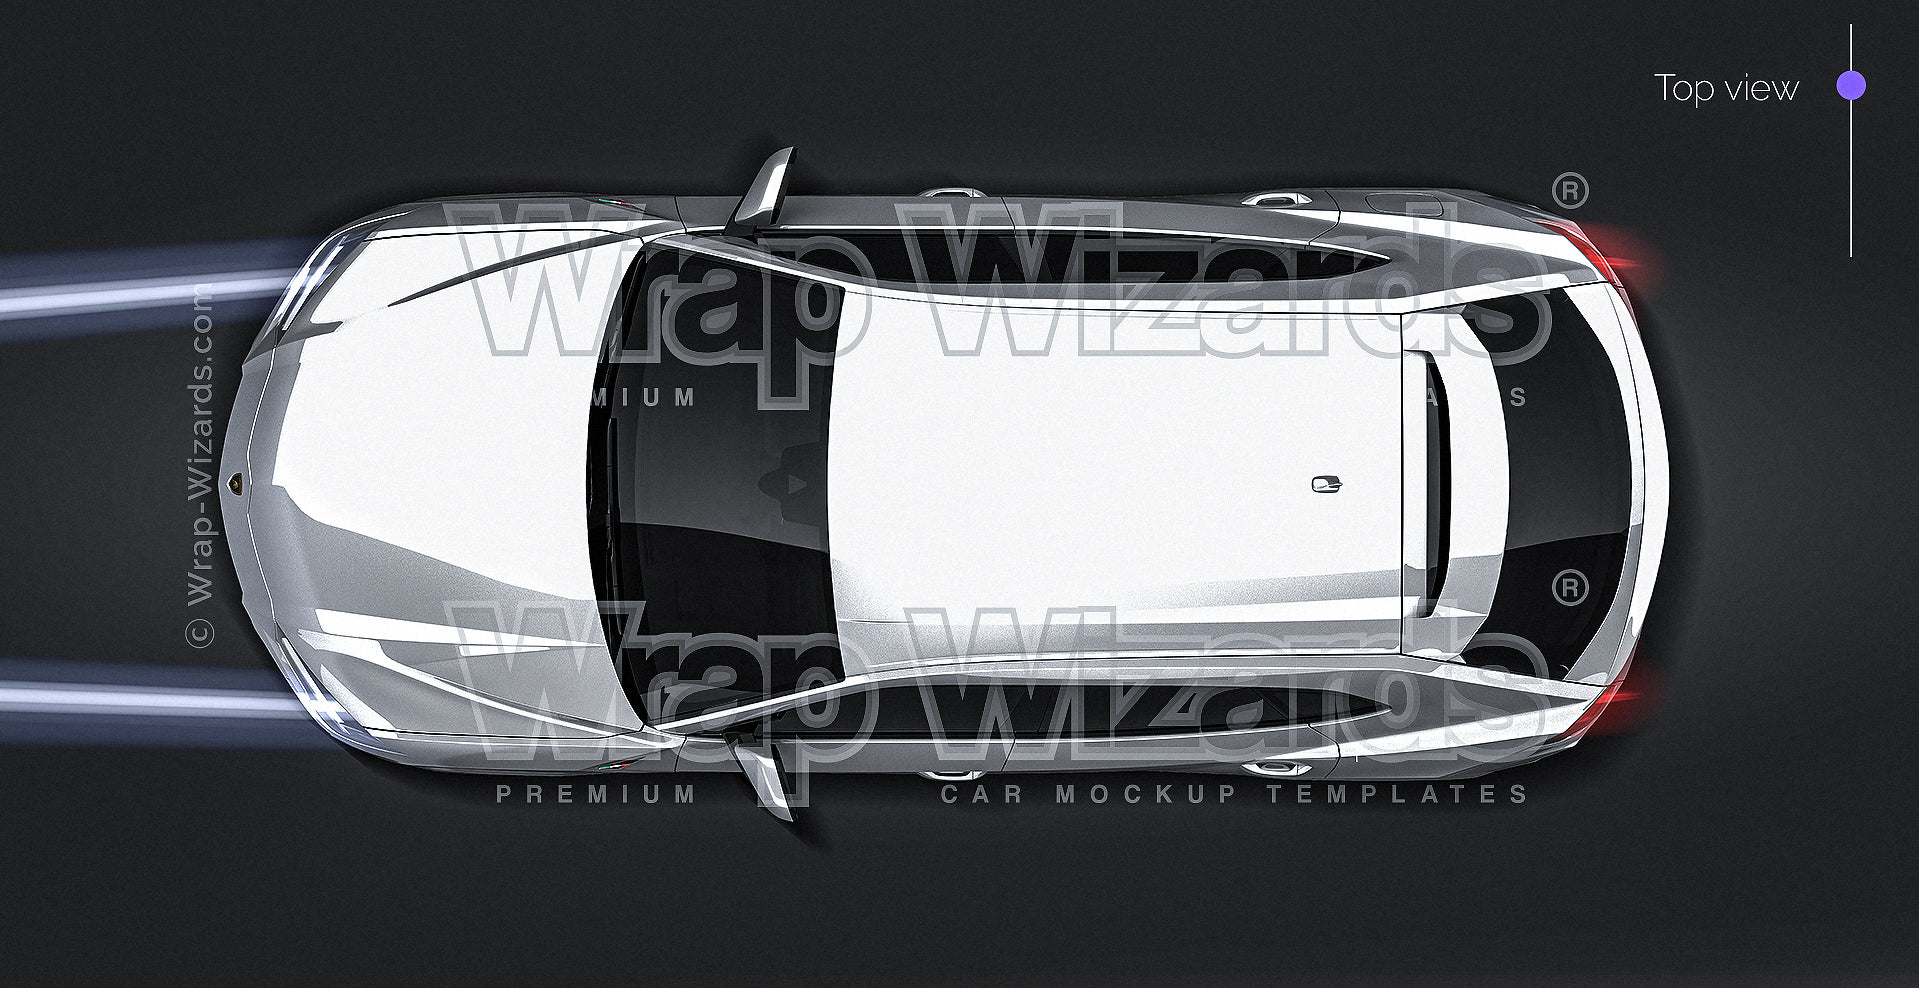 Lamborghini Urus 2019 glossy finish - all sides Car Mockup Template.psd